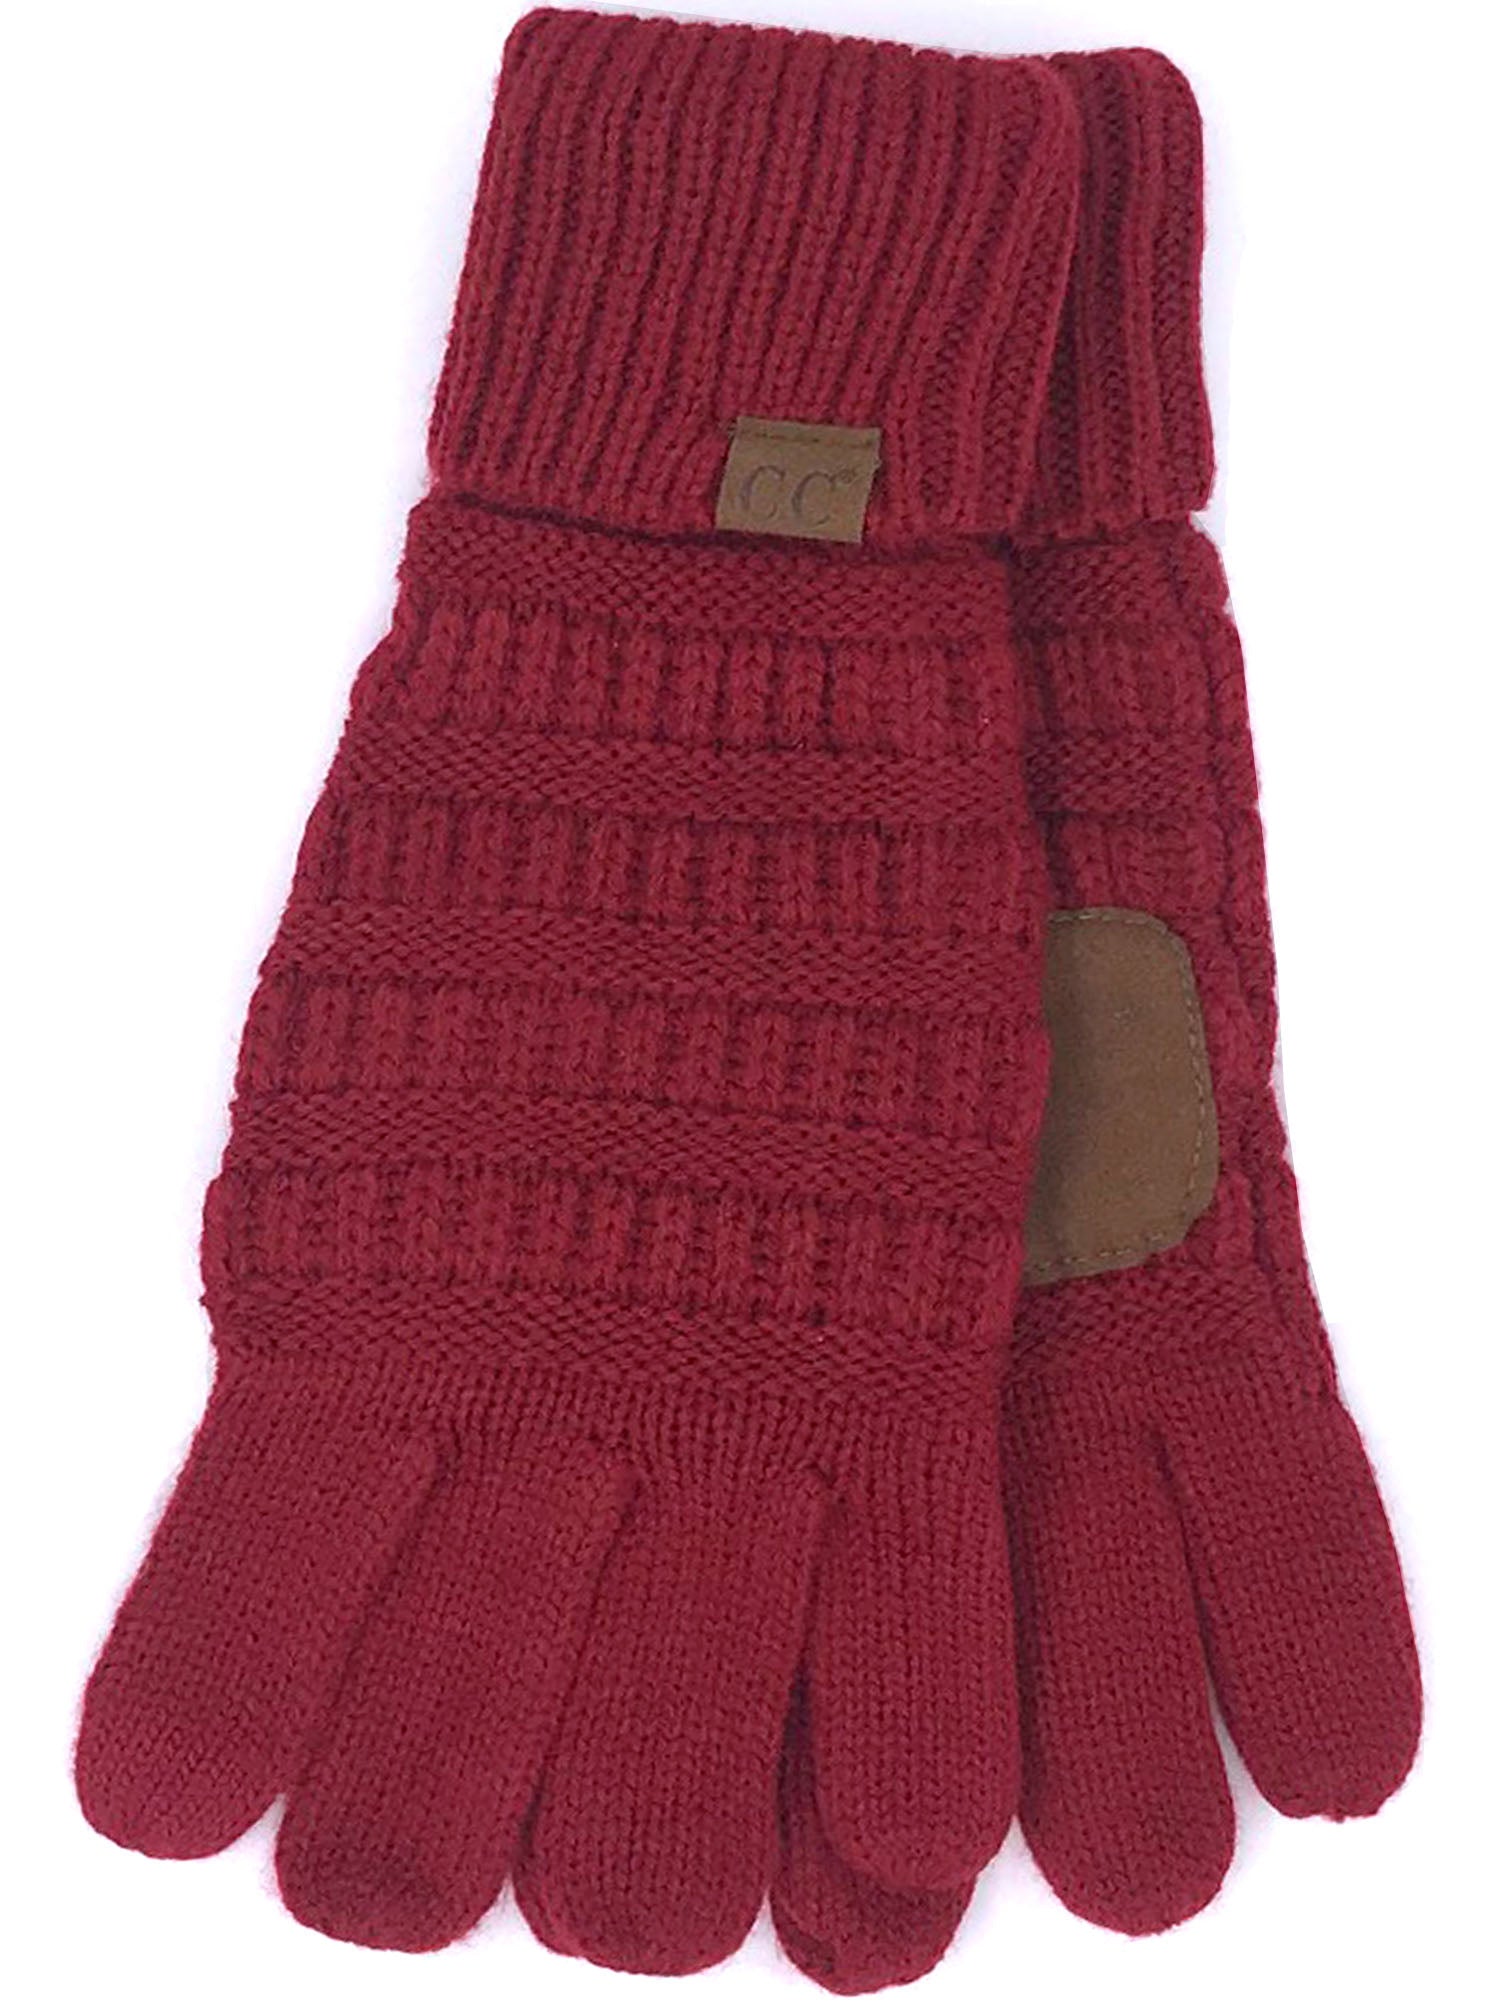 G-20 C.C Burgundy Gloves